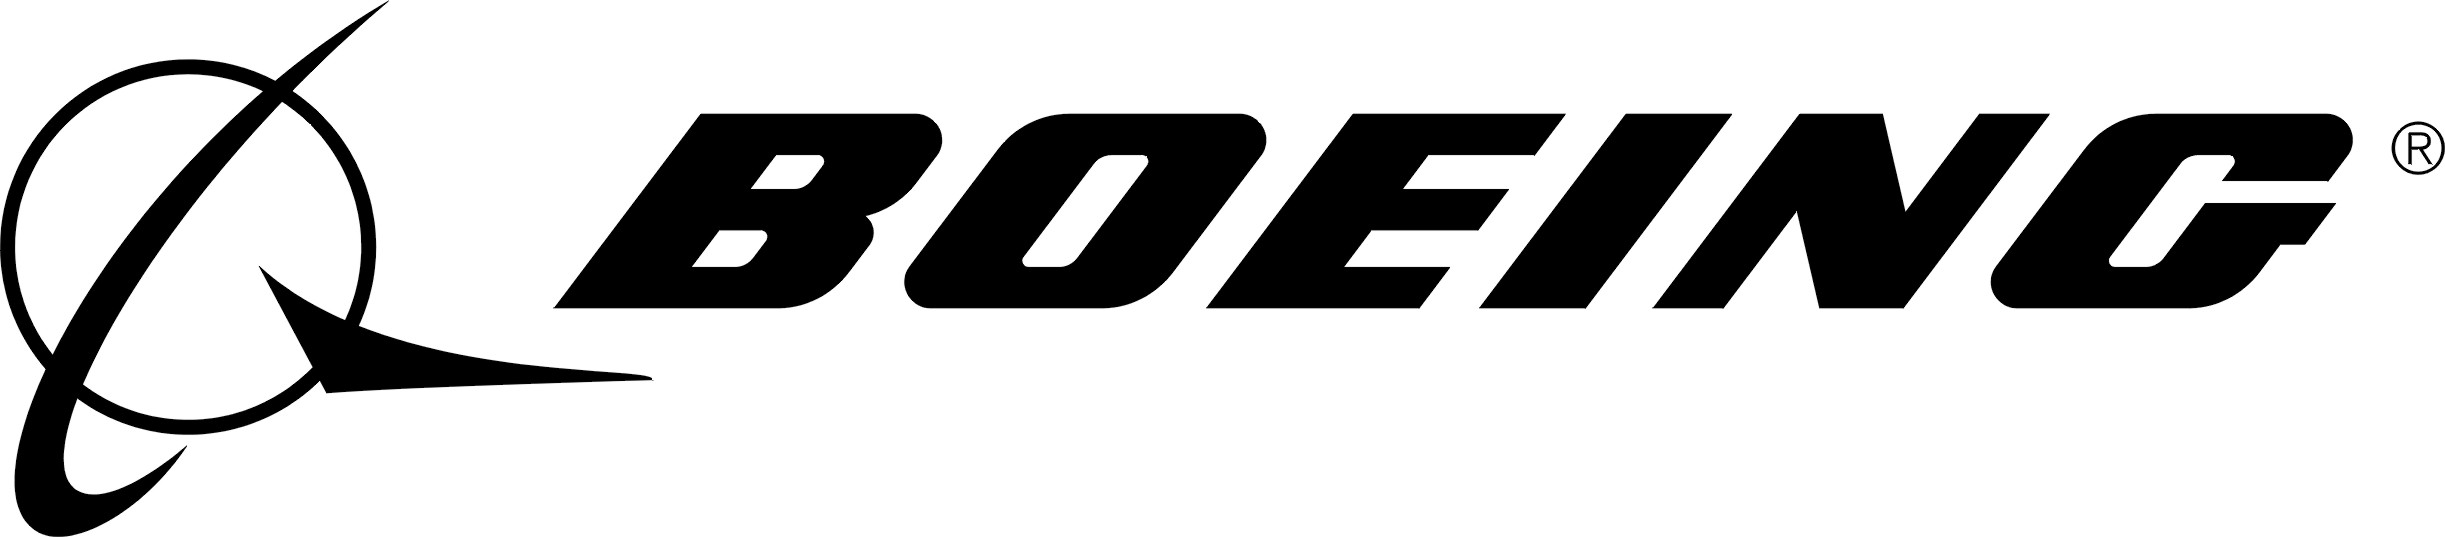 Логотип корпорации Boeing